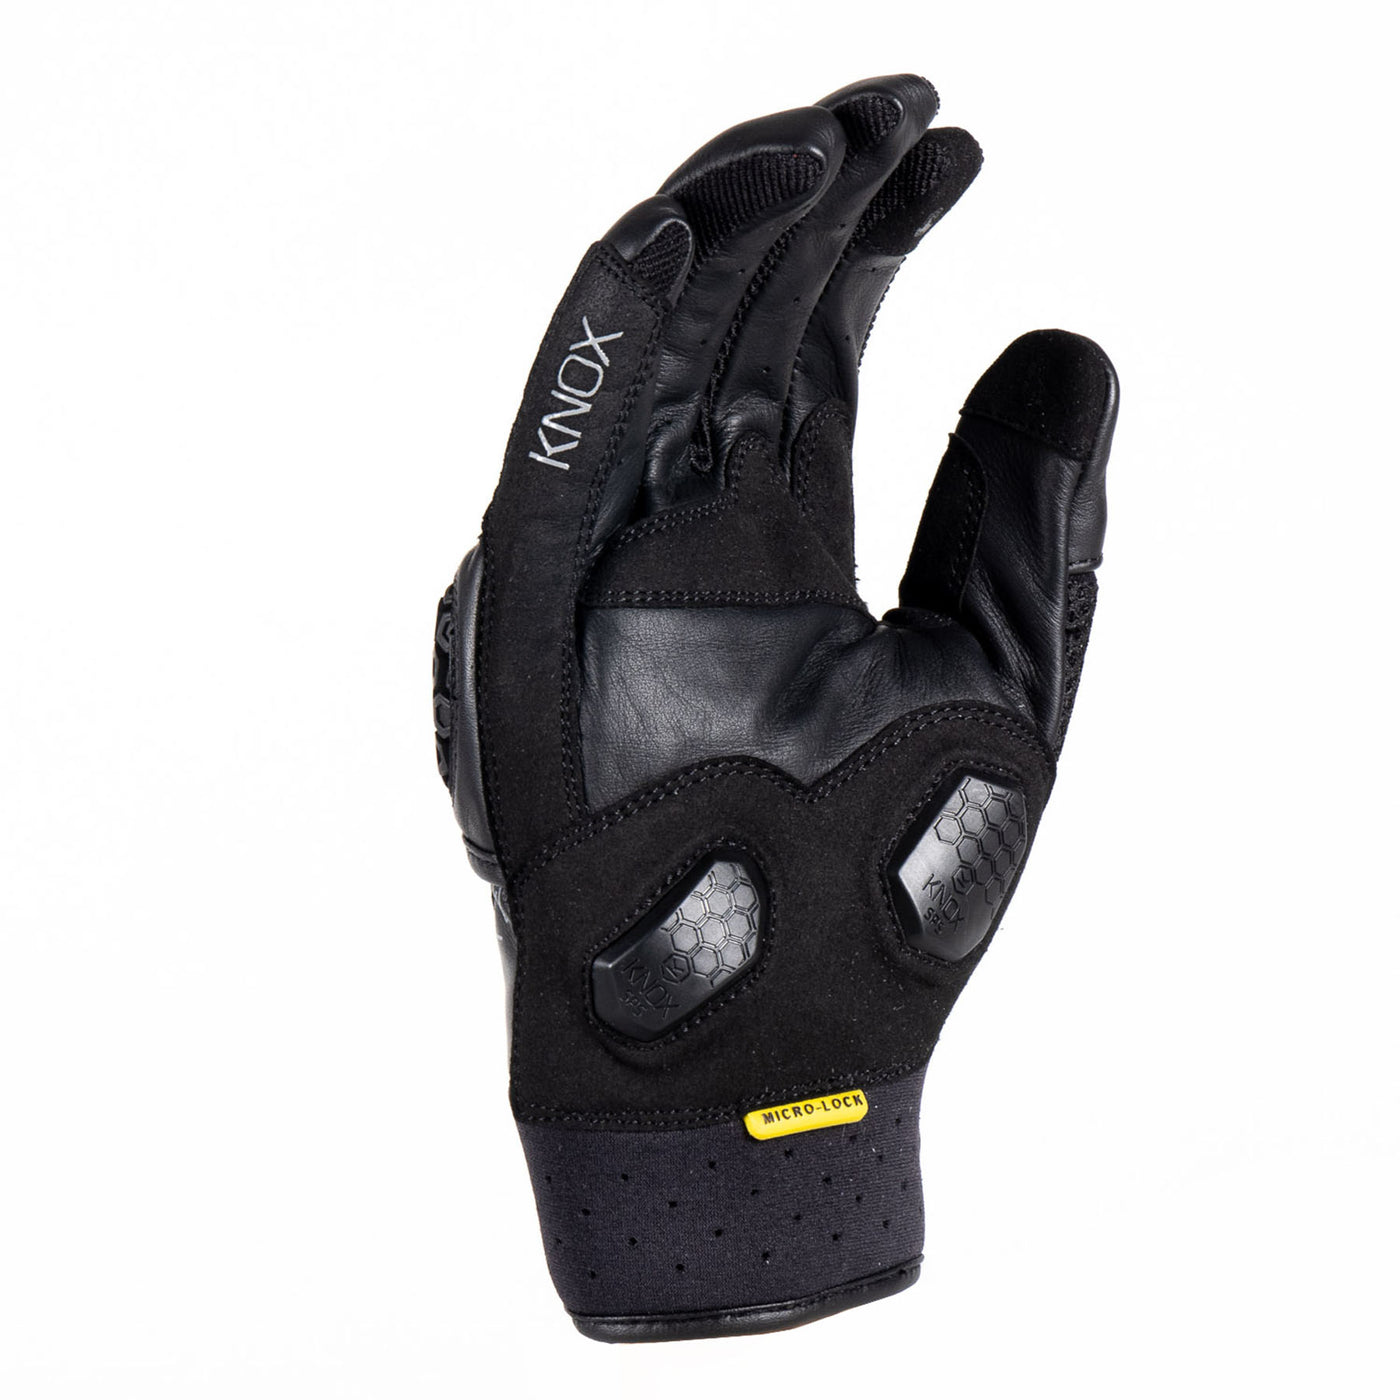 Knox Urbane Pro motorcycle gloves